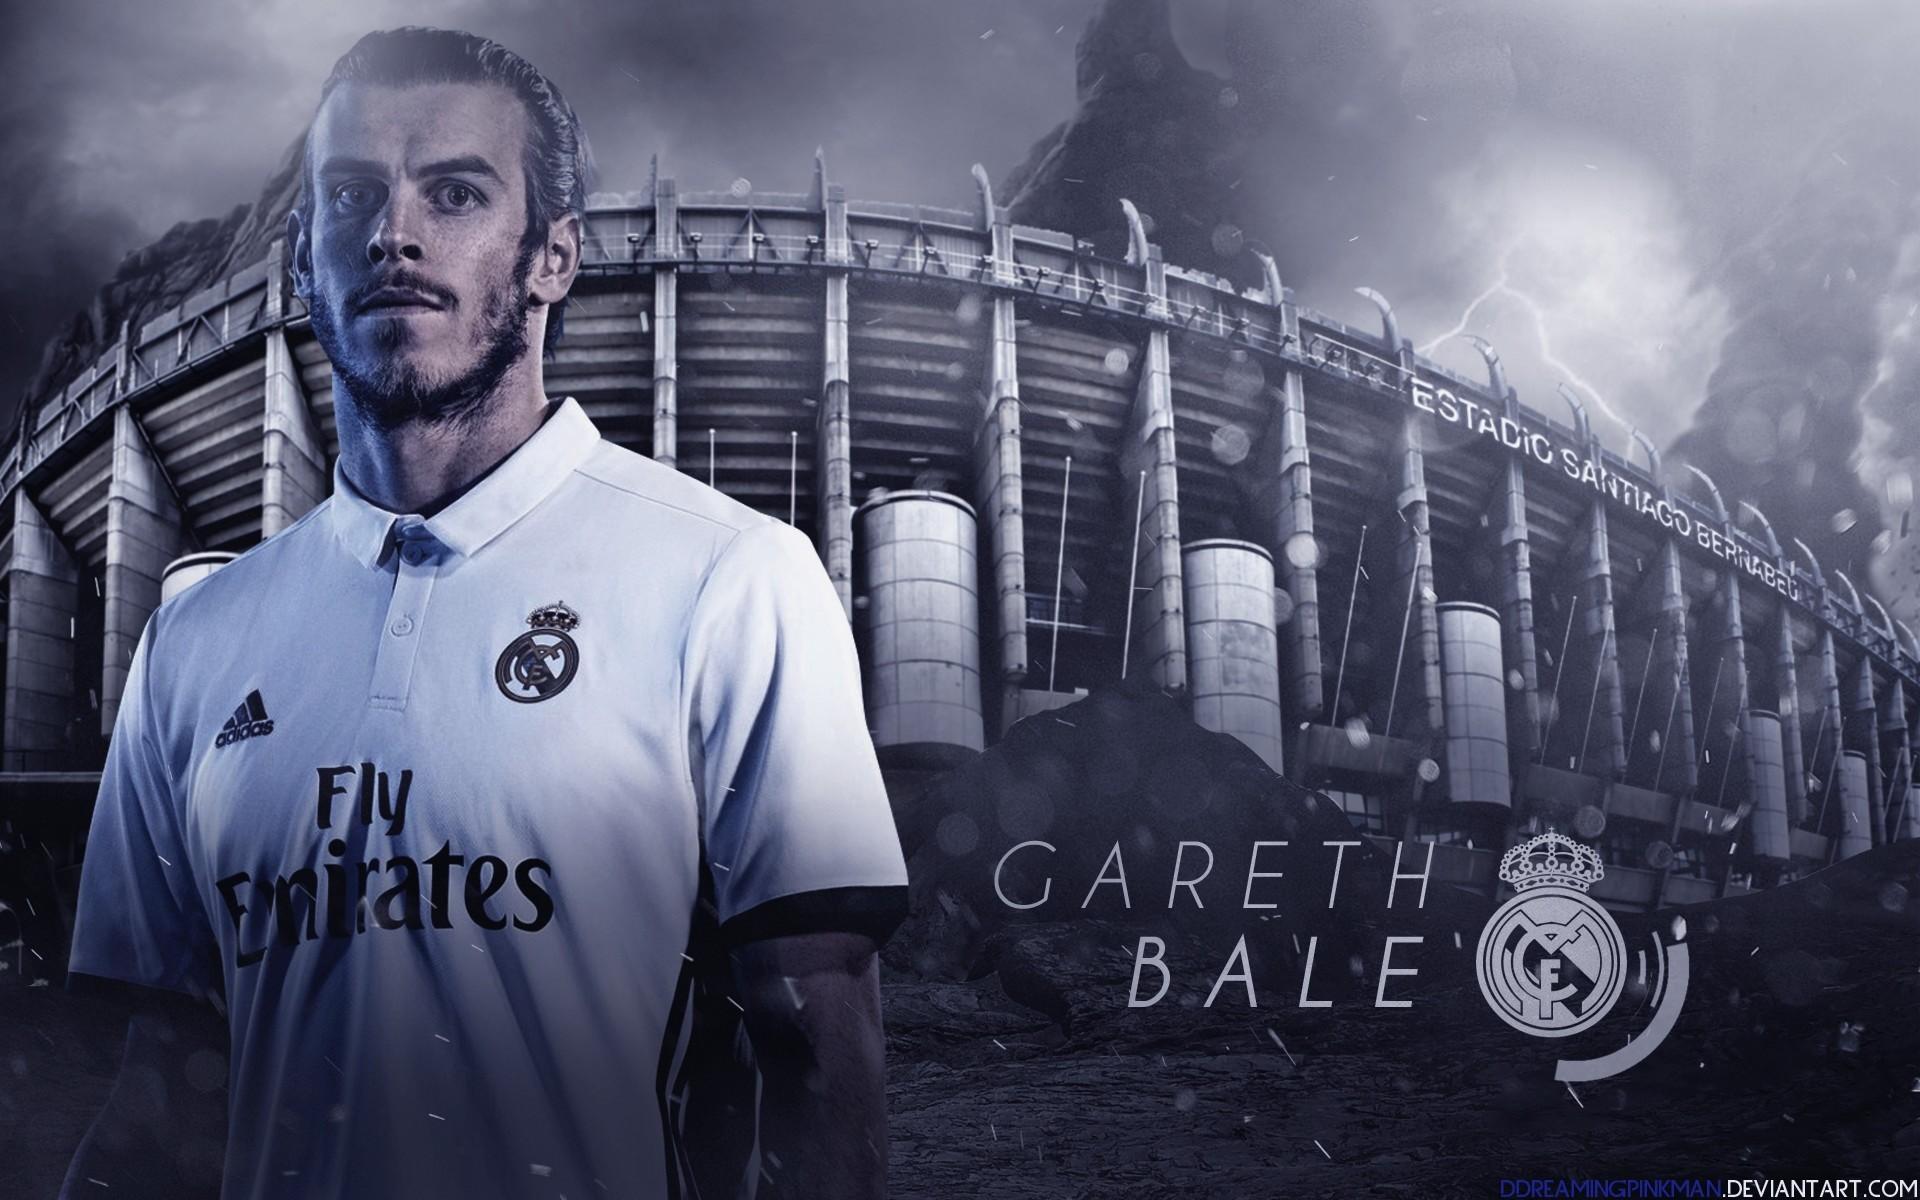 Gareth Bale Wallpaper 2018 HD (the best image in 2018)